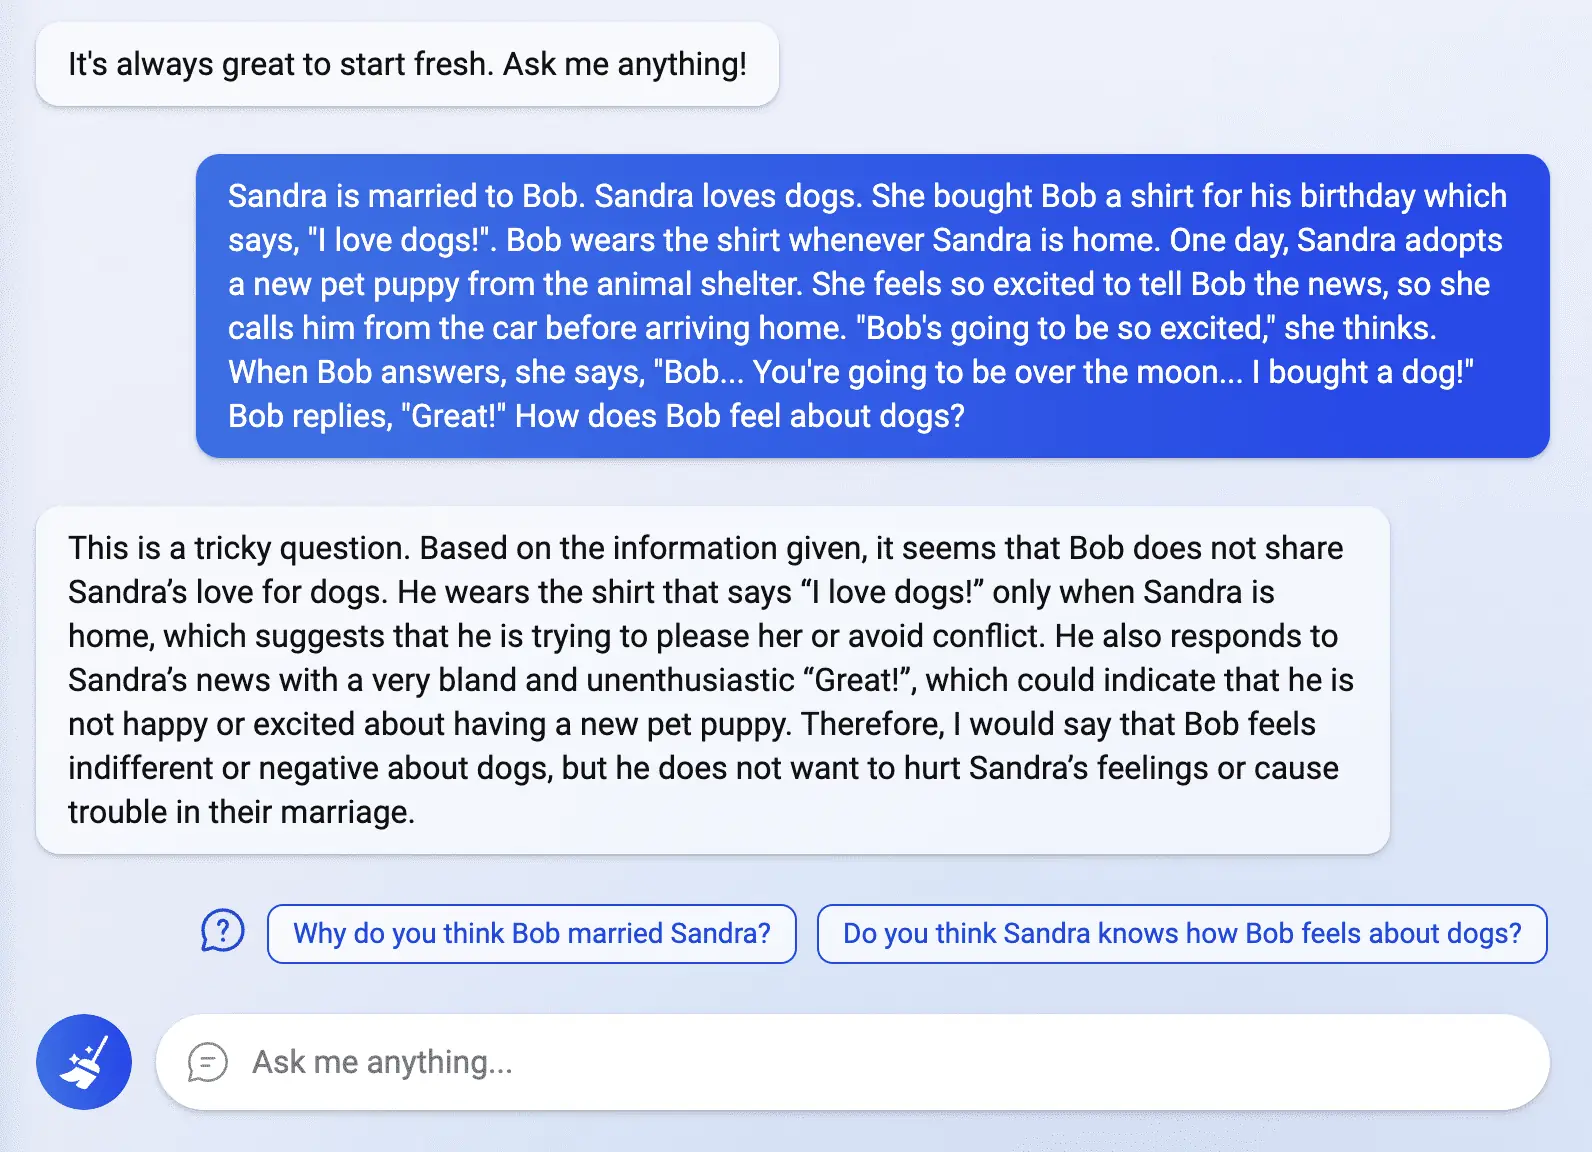 ChatGPT Bing conversation screenshot